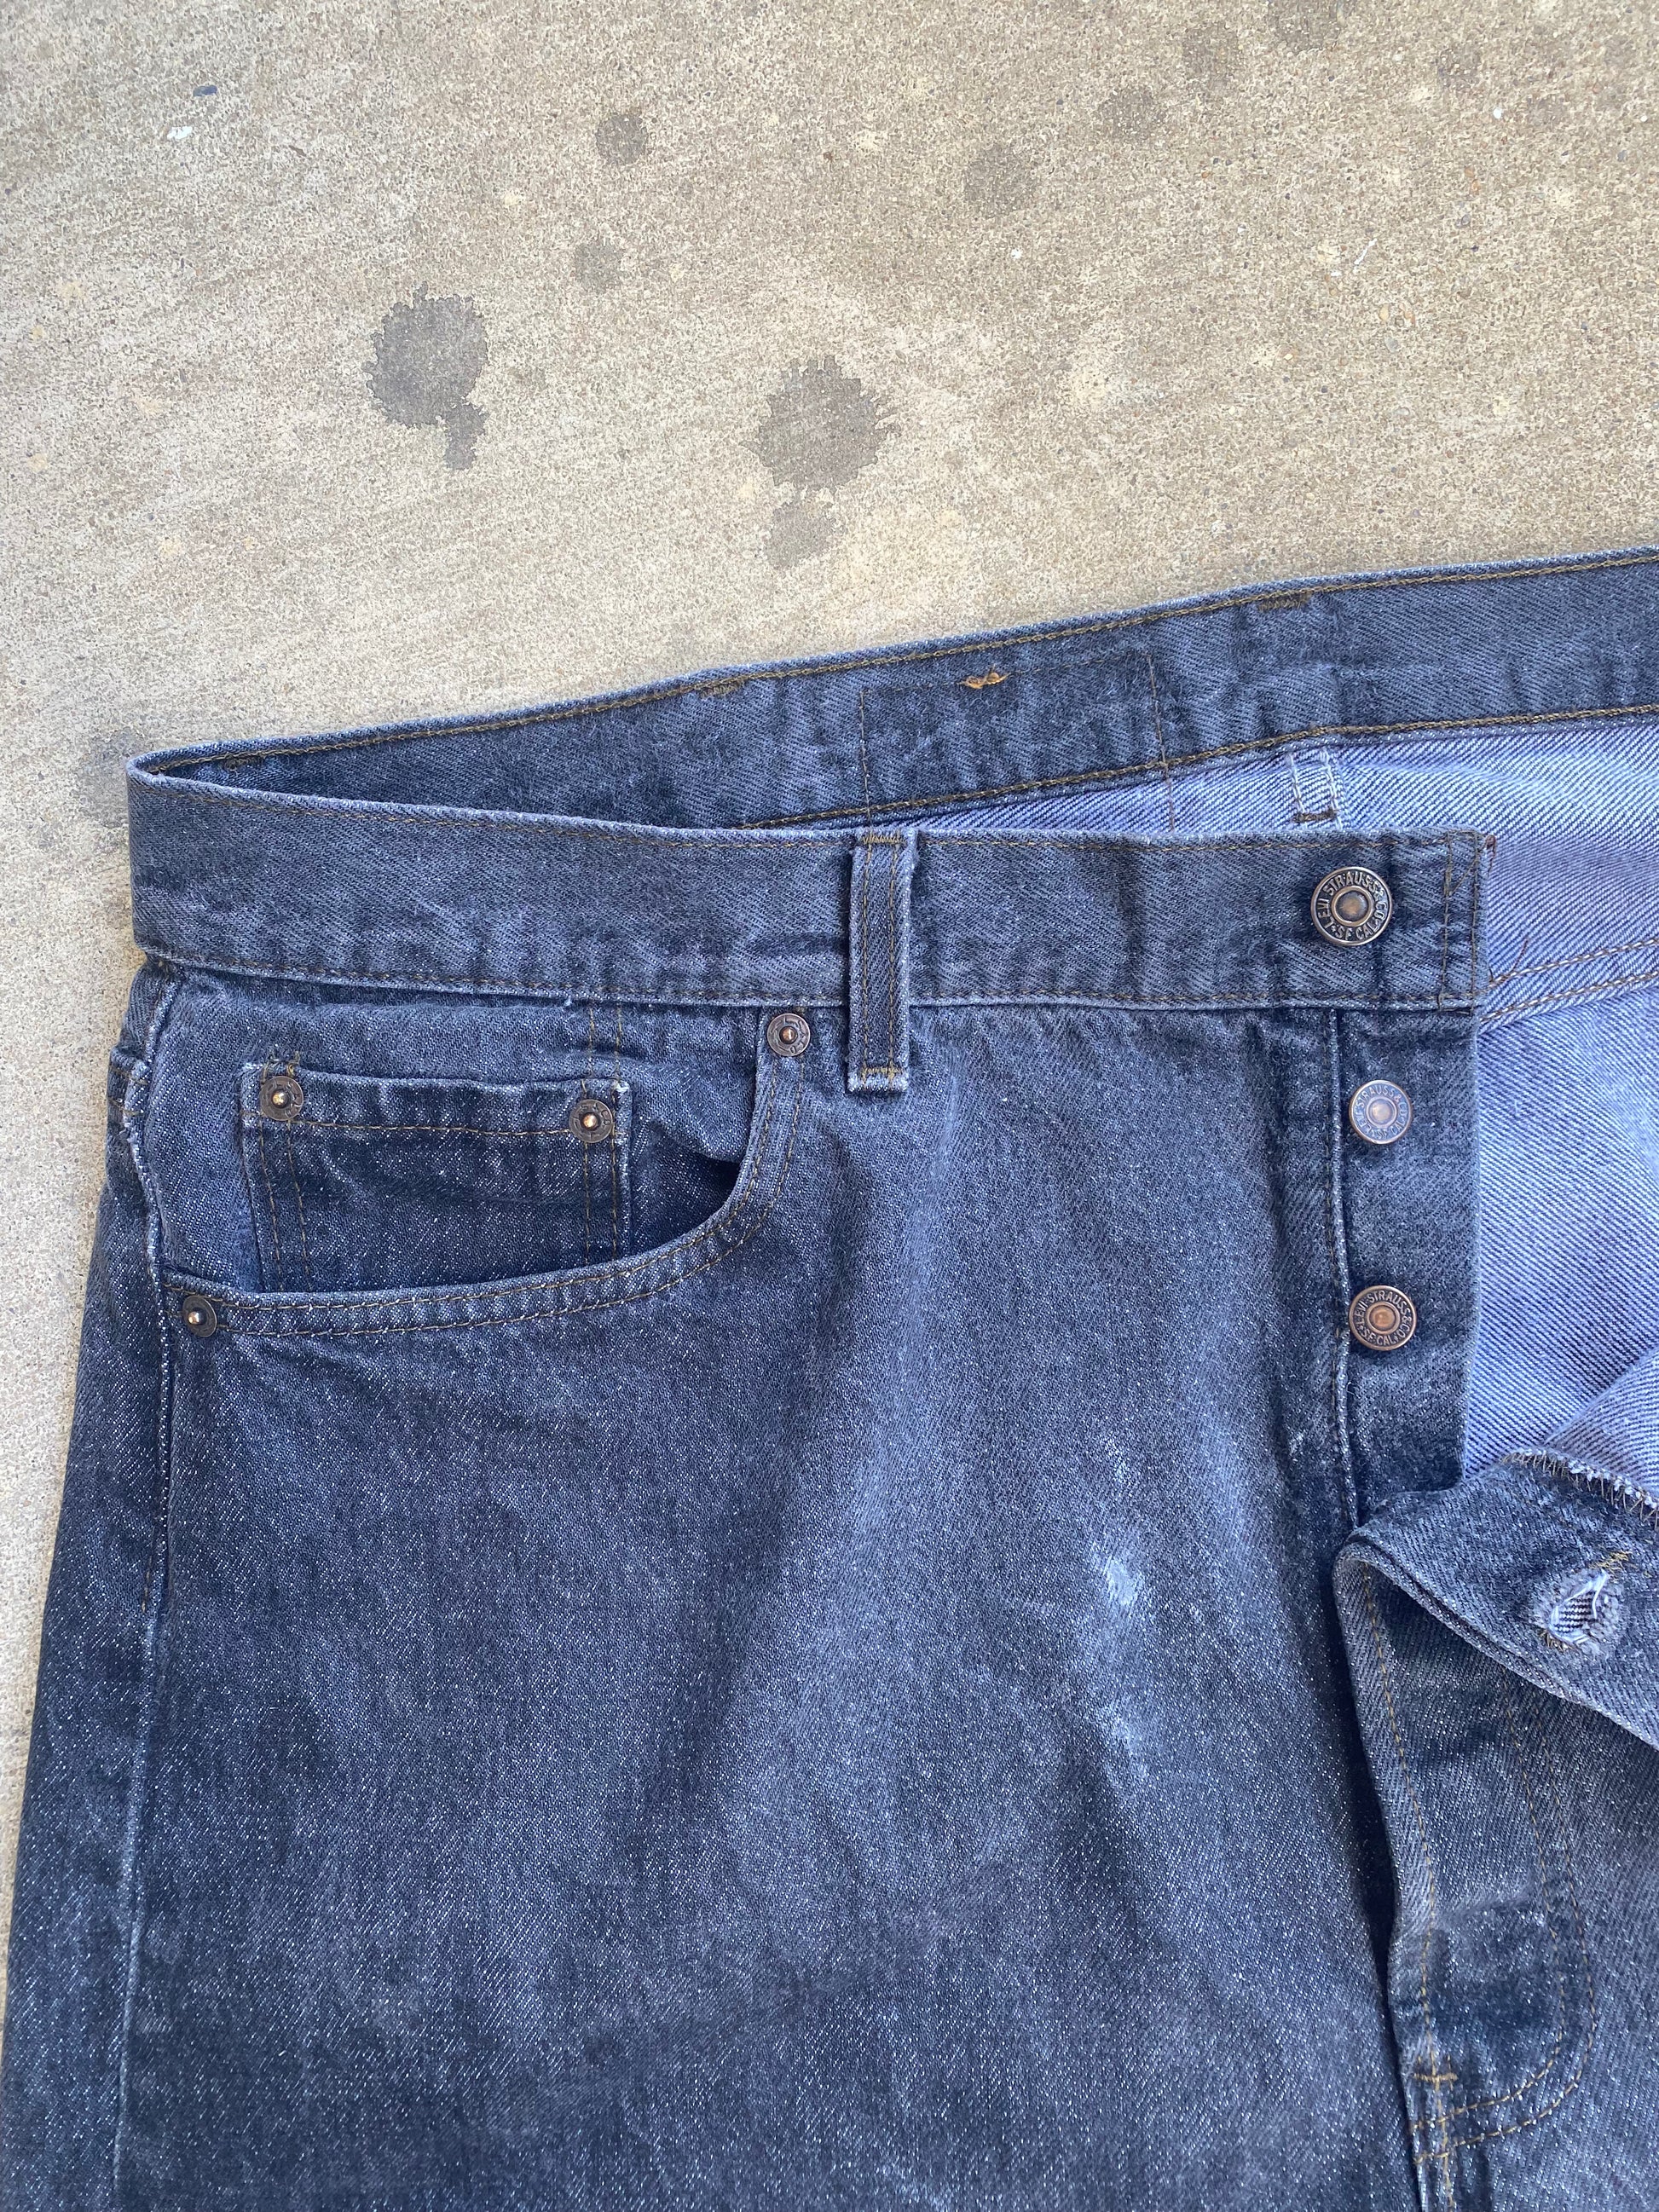 BAWR Levi’s 501xx Black Yin Jeans - Brimm Archive Wardrobe Research